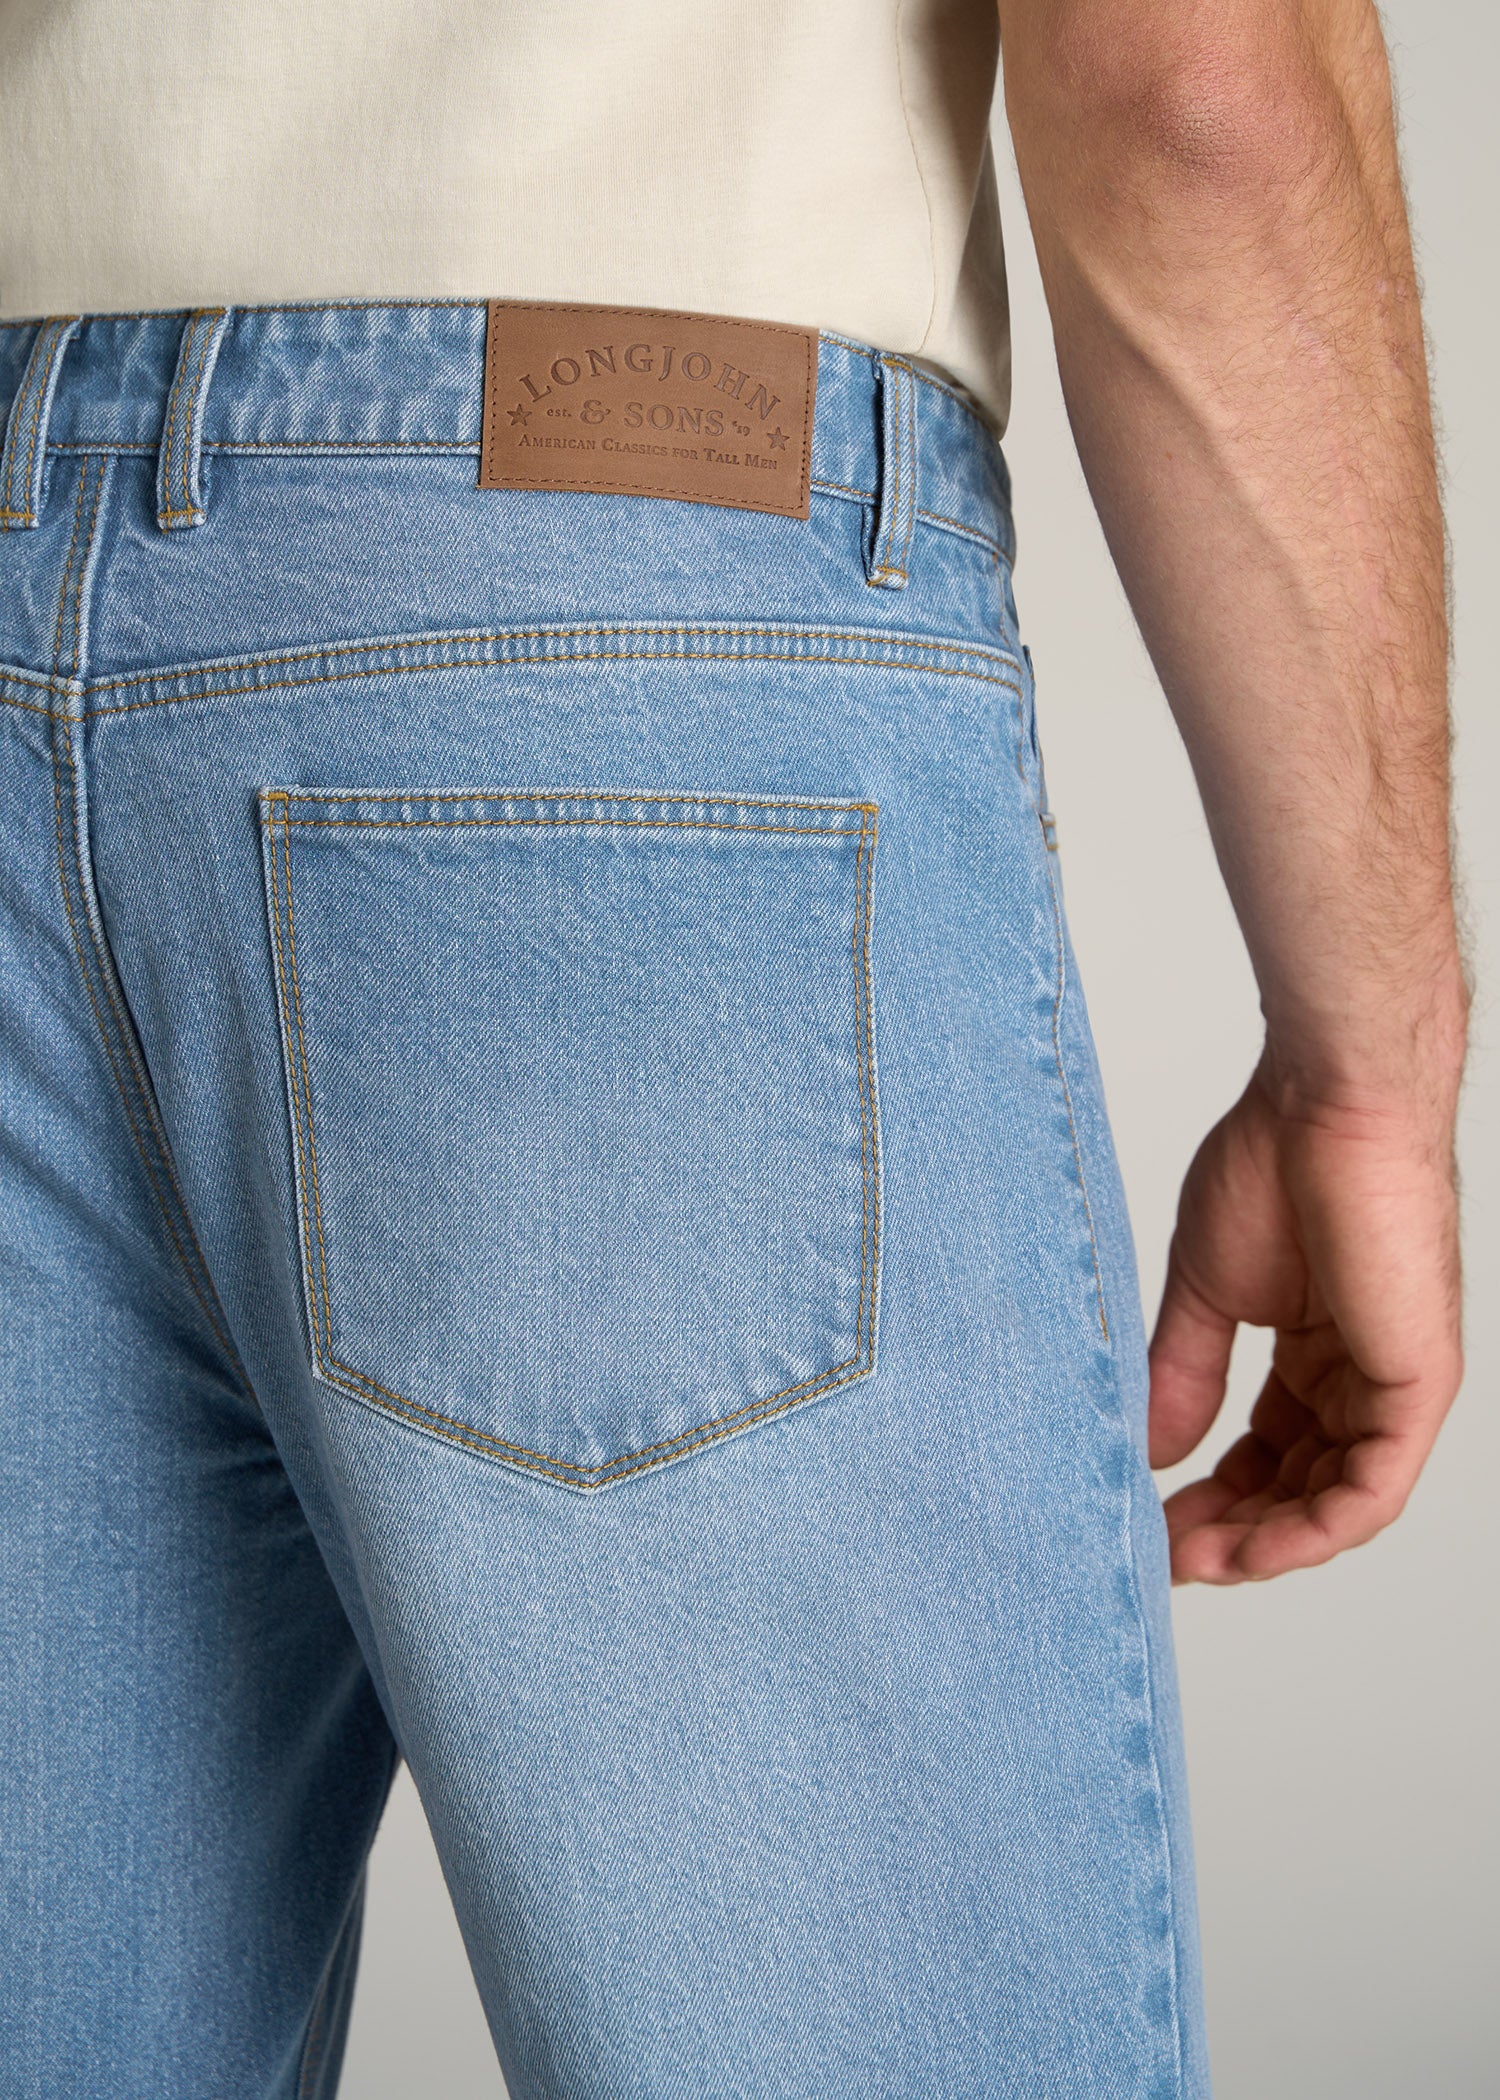 LJ&S Men's Tall Jeans Straight Leg Stone Wash Light Blue – American Tall